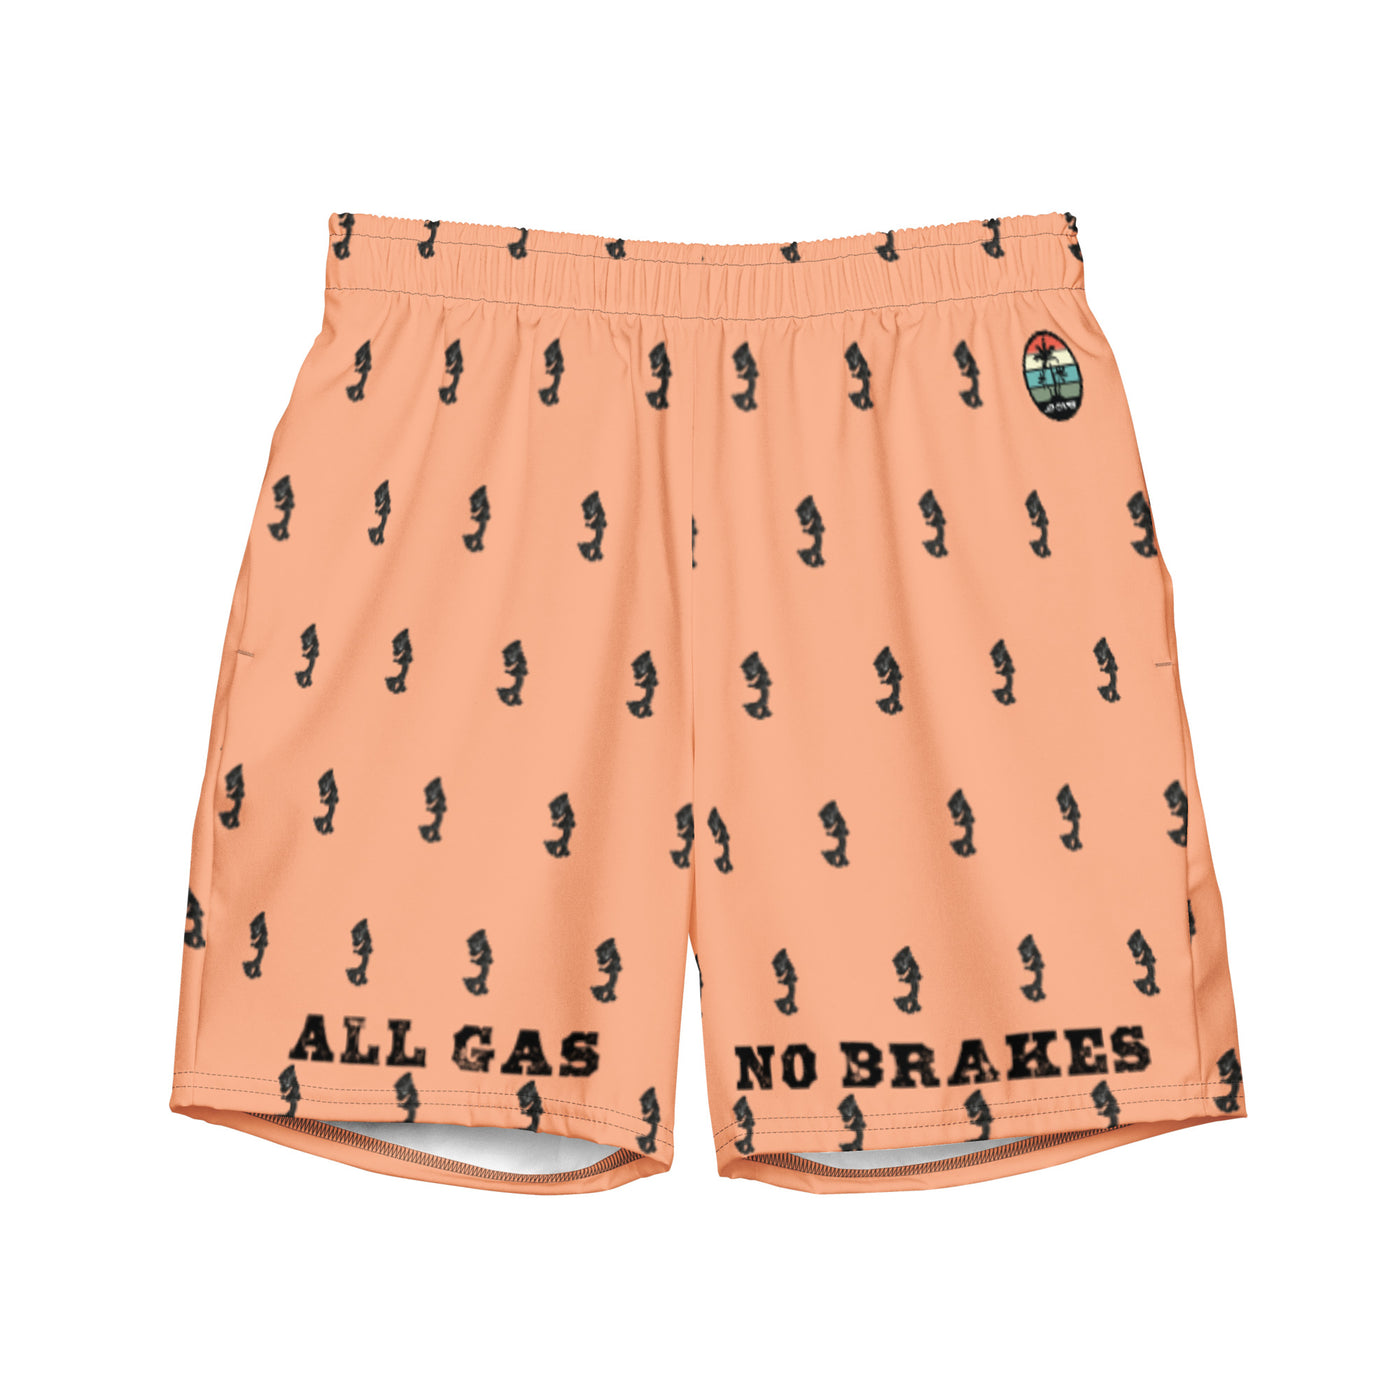 All Gas No Brakes - Swim Trunks